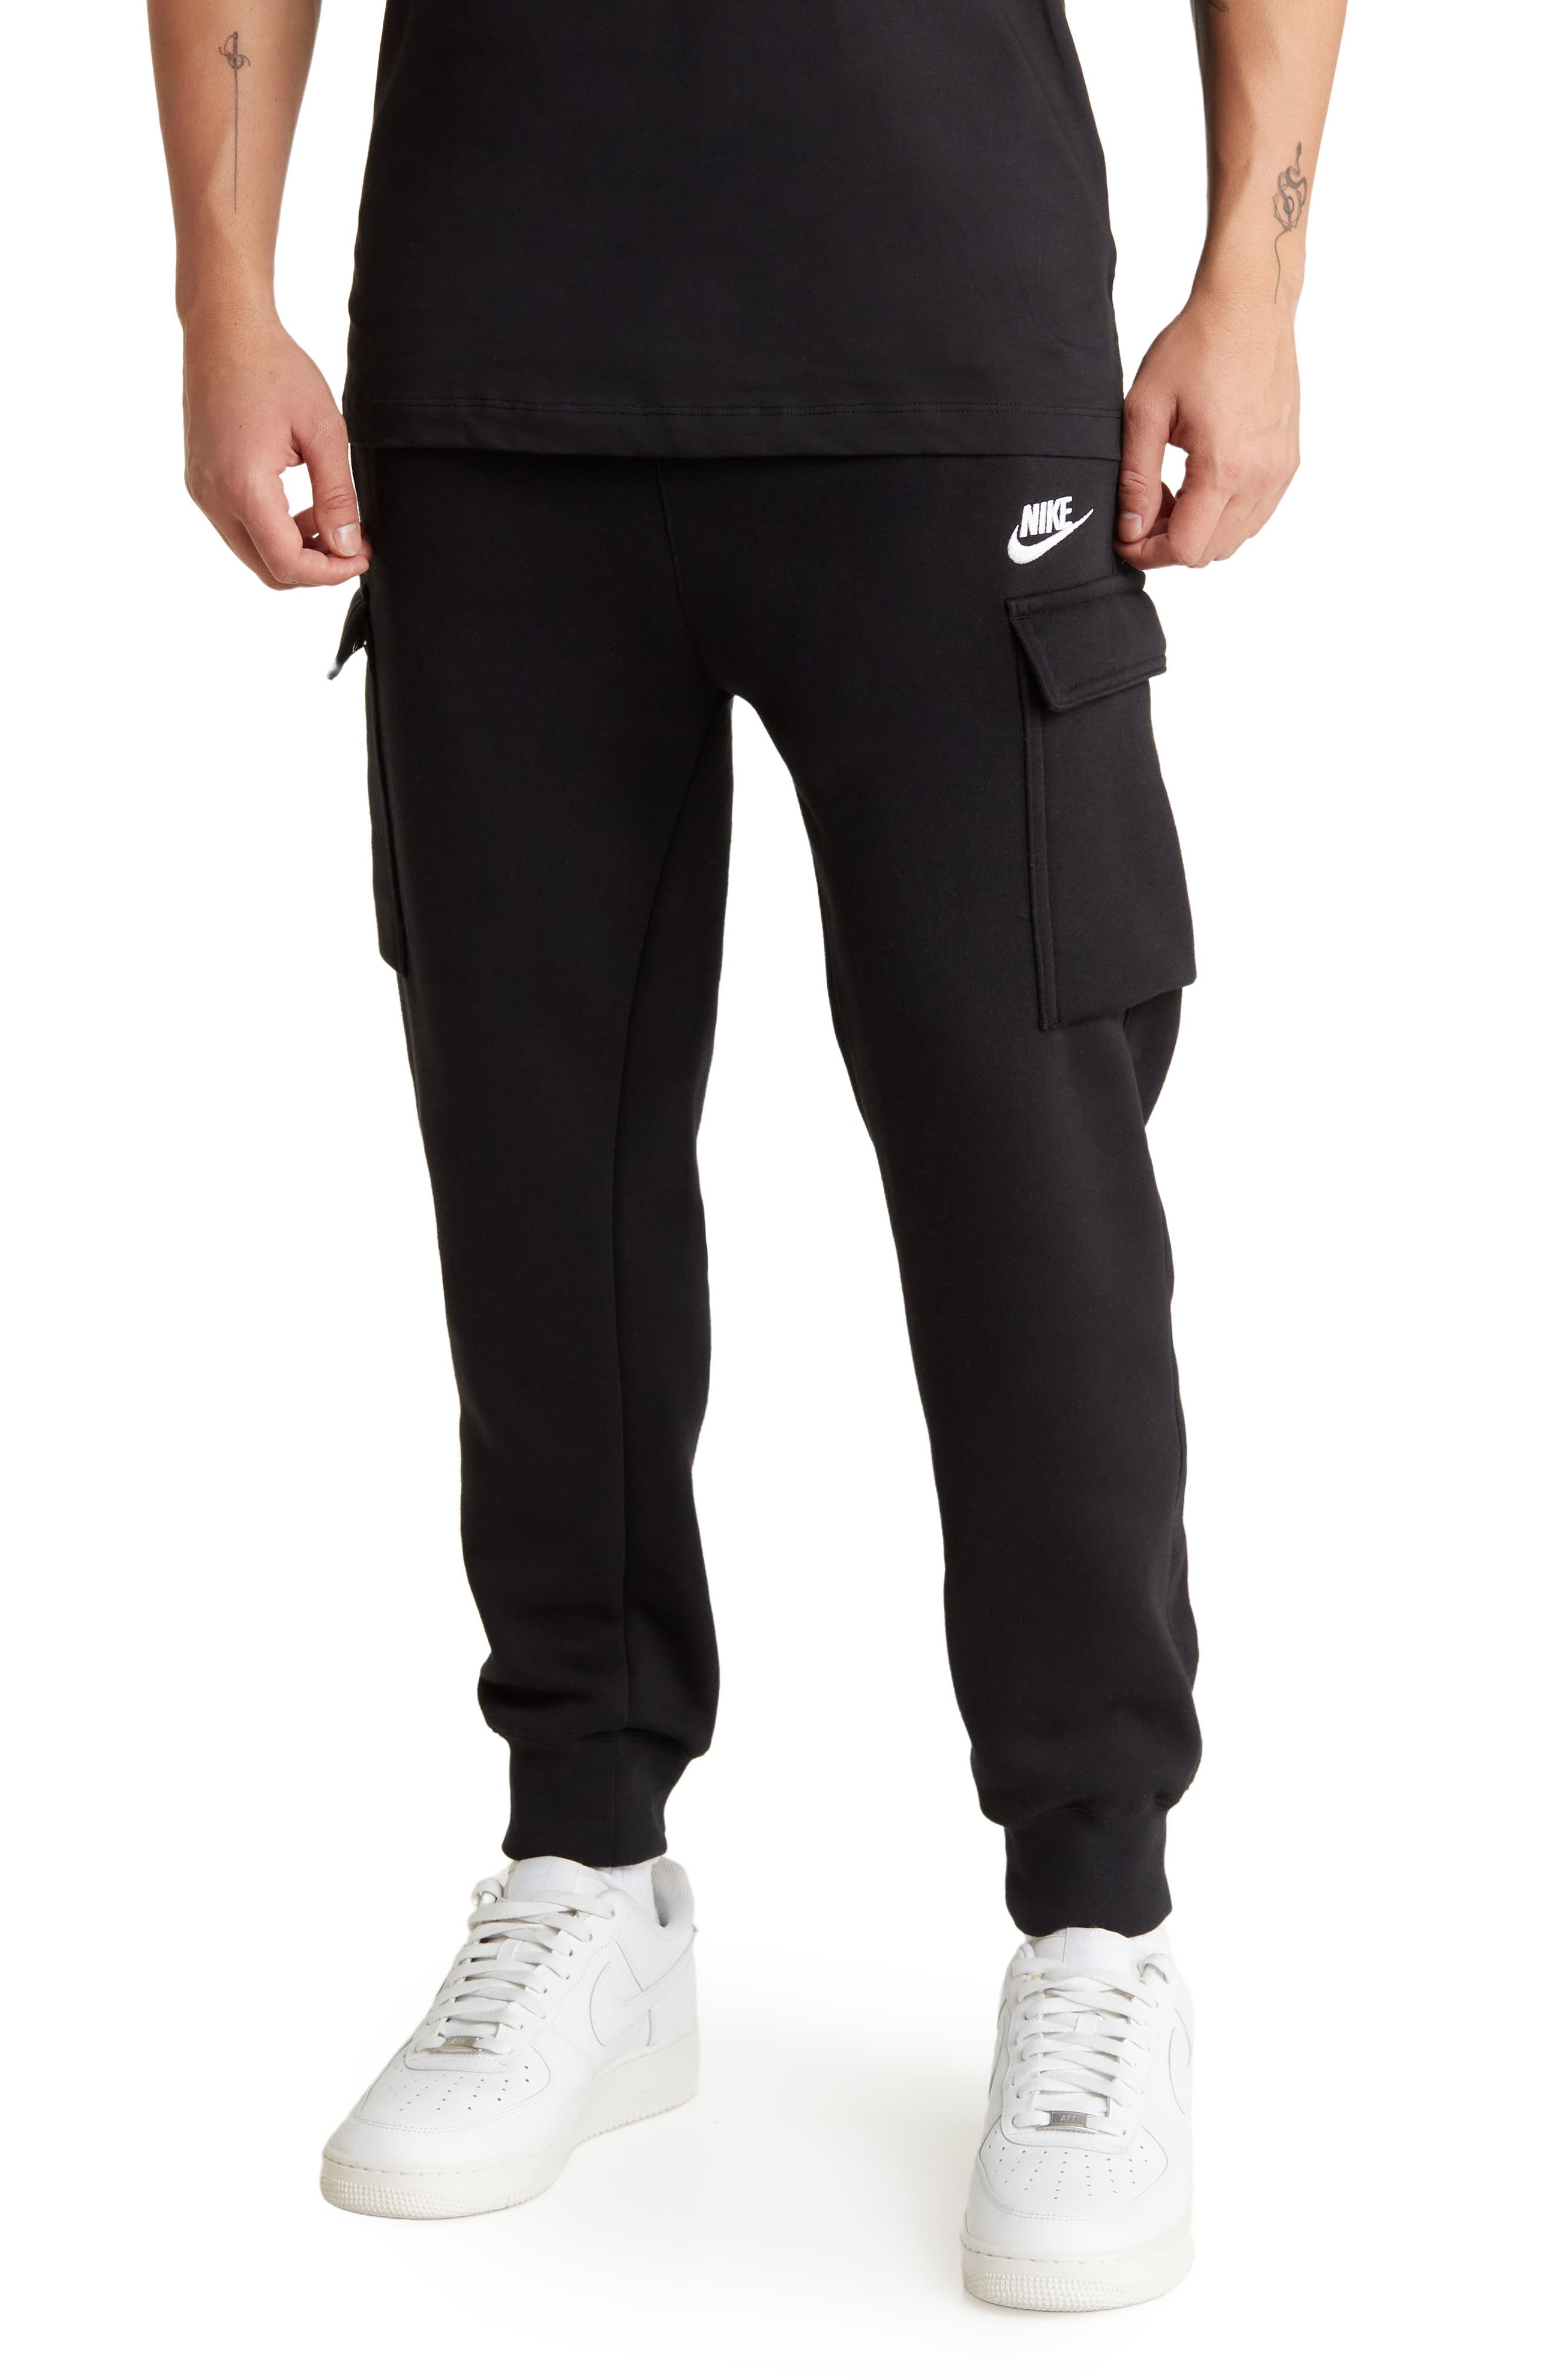 Men's Nike Pants   Nordstrom